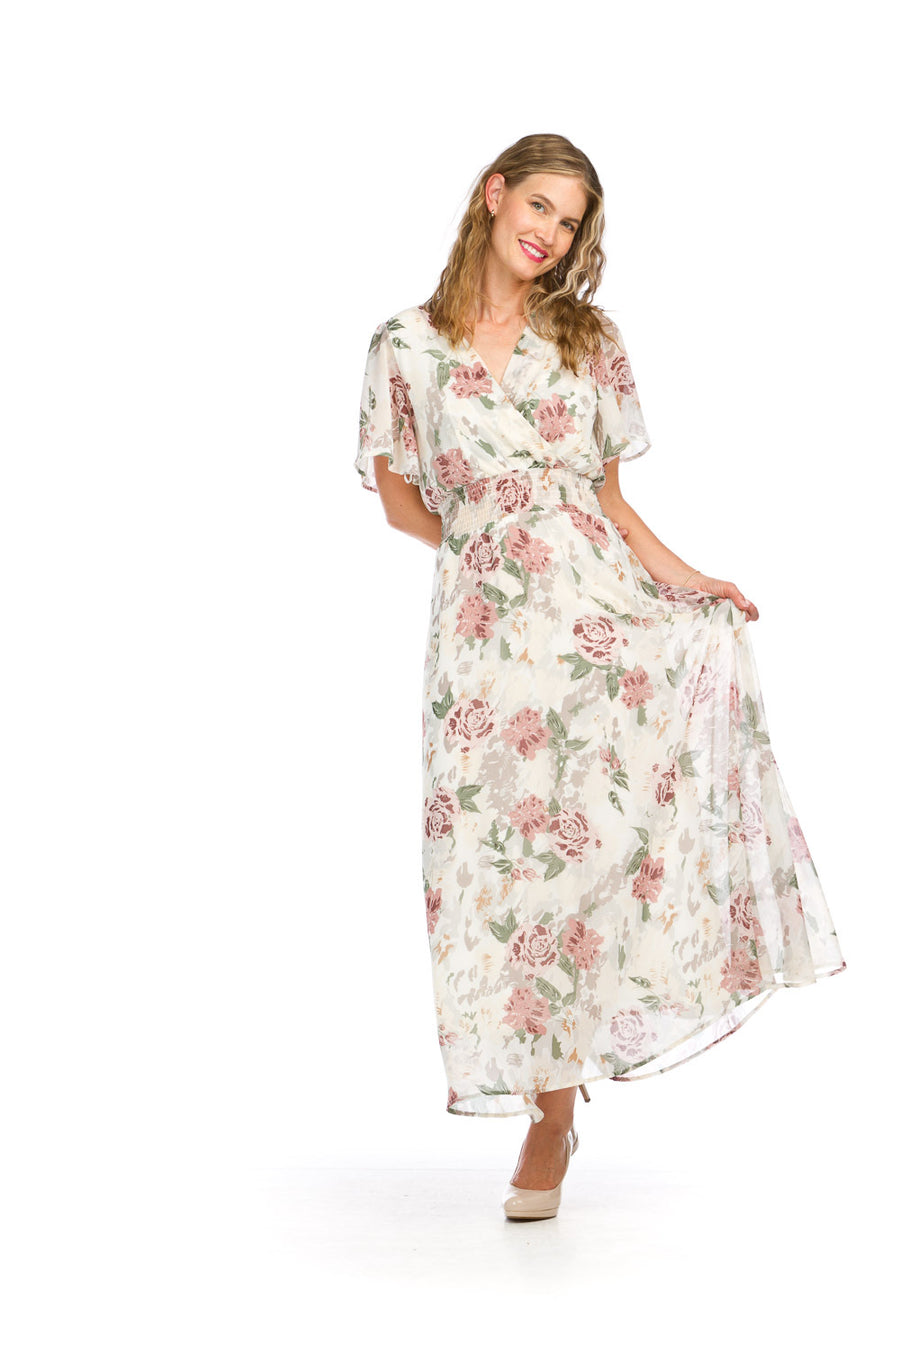 Papillon PD-16635 Floral Short Sleeve Maxi Dress - White